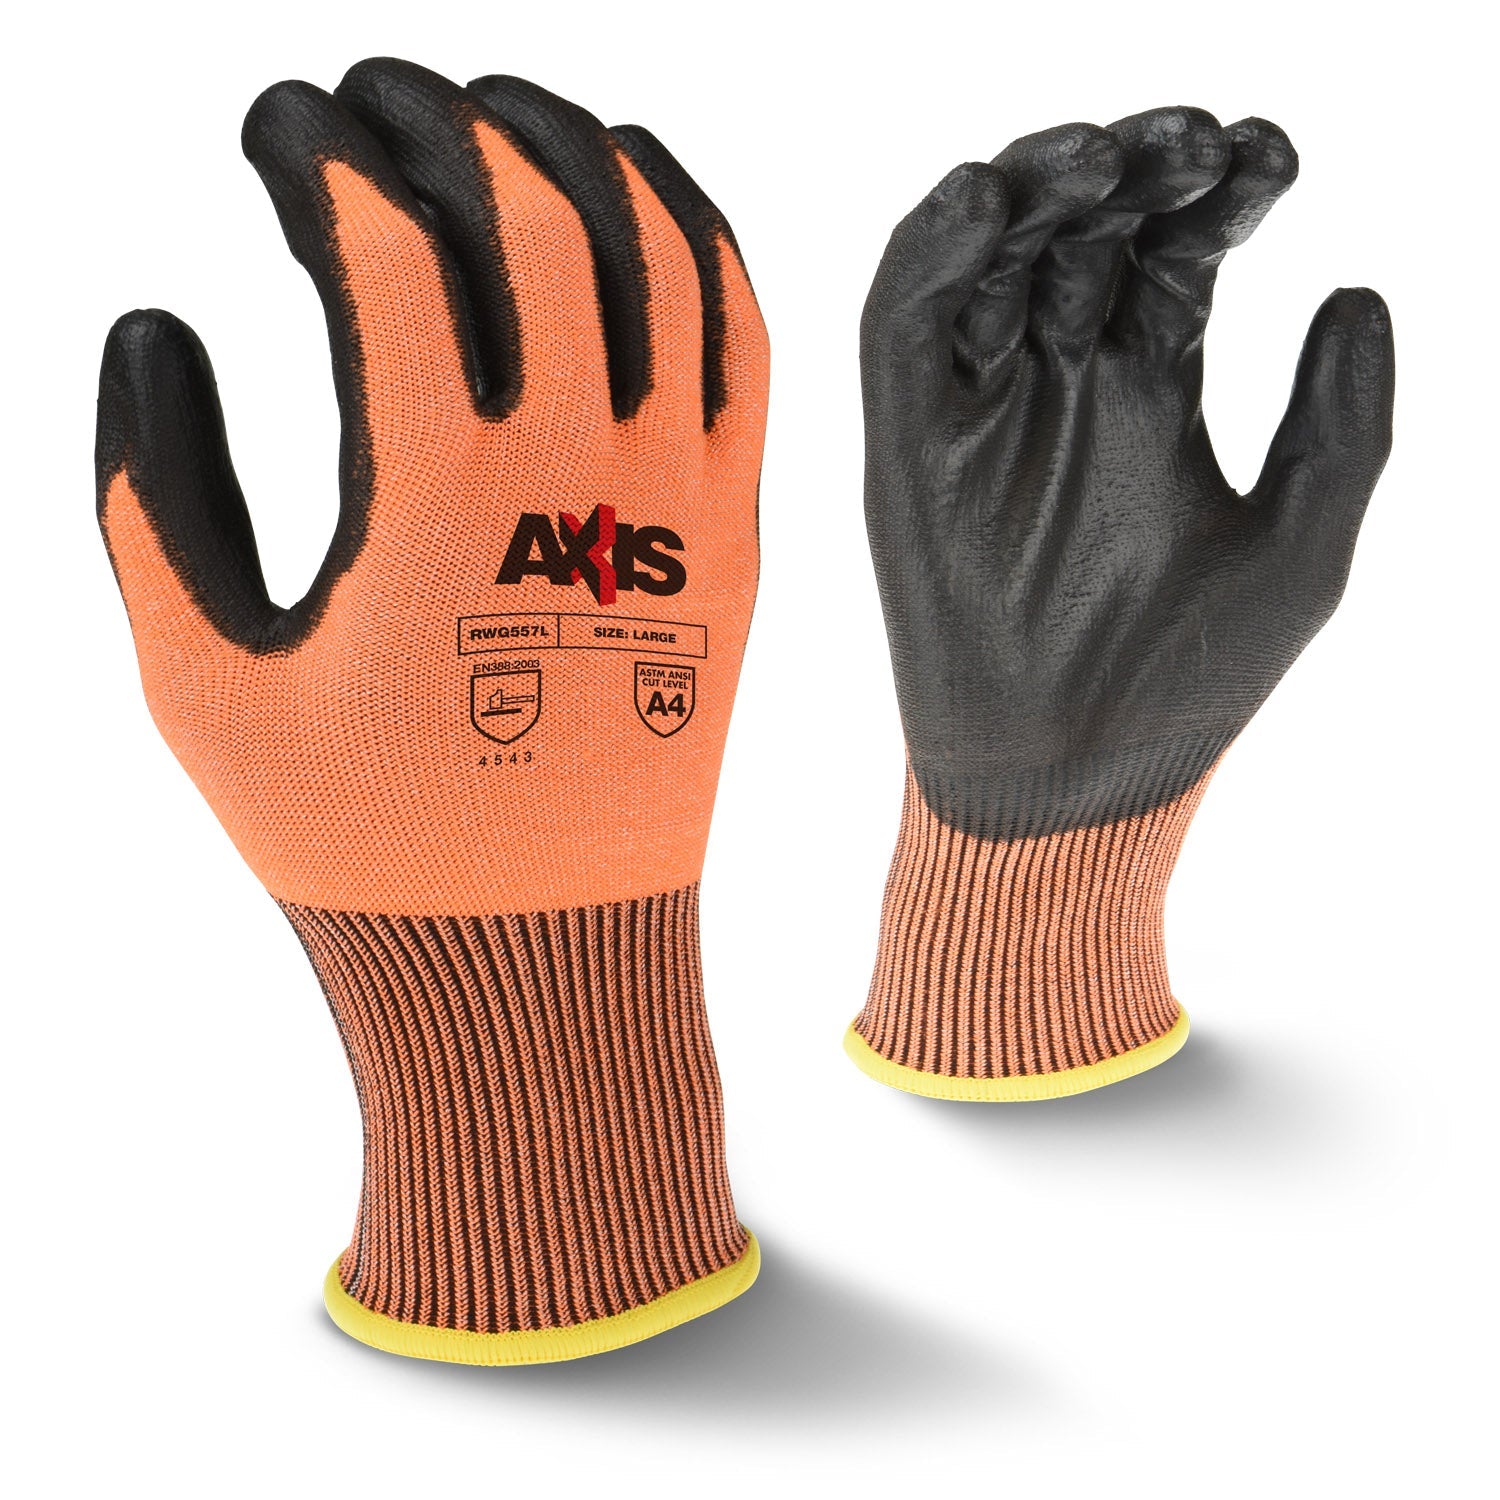 Radians RWG557 AXIS™ Cut Protection Level A4 High Tenacity Nylon Glove -